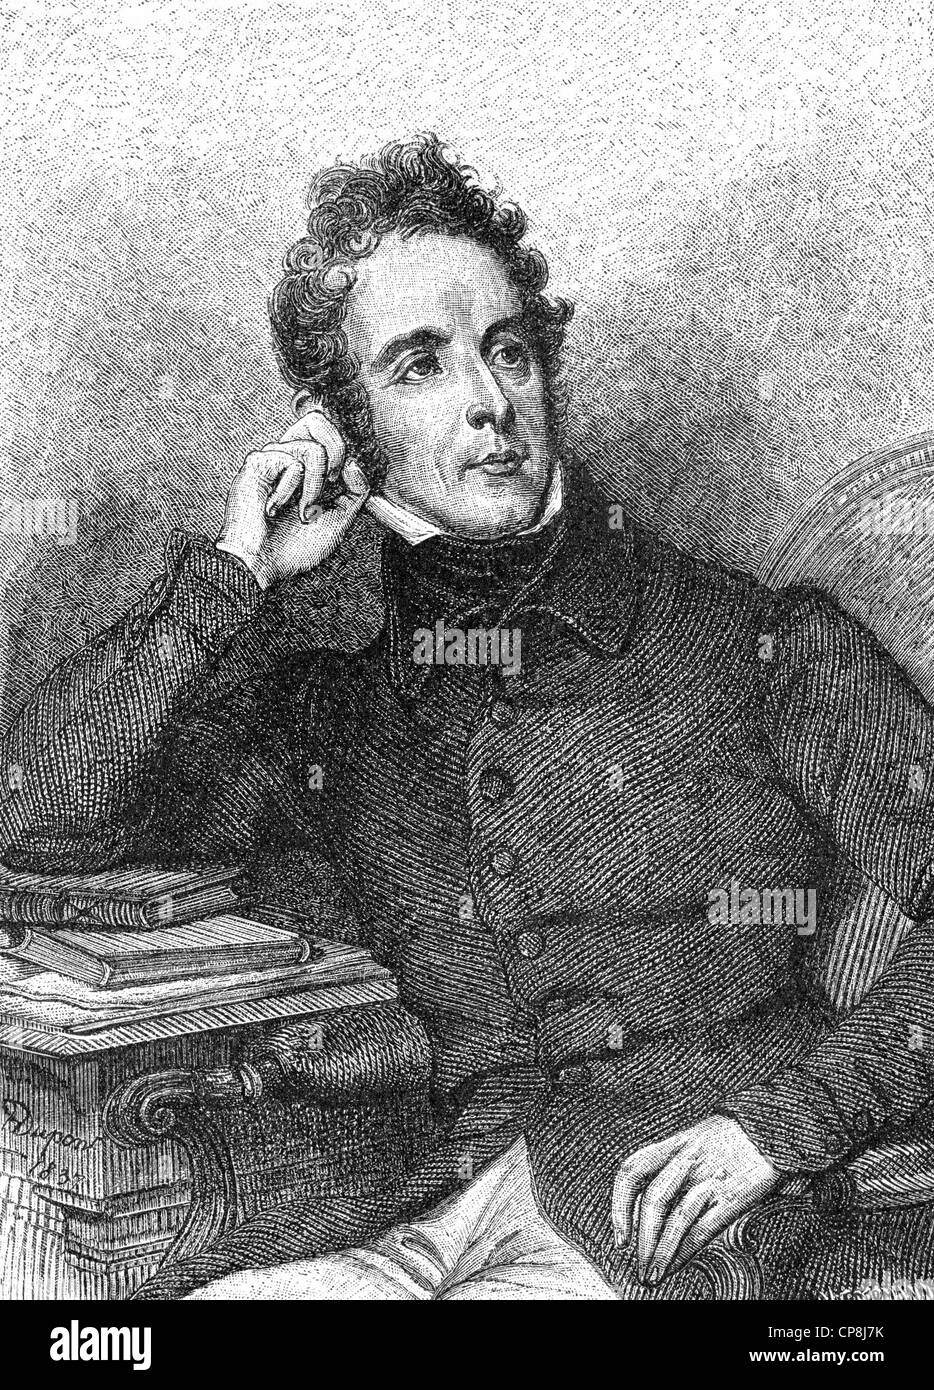 Alphonse Marie Louis Prat de Lamartine, 1790 - 1869, a French poet, writer and politician, Historische Druck aus dem 19. Jahrhun Stock Photo